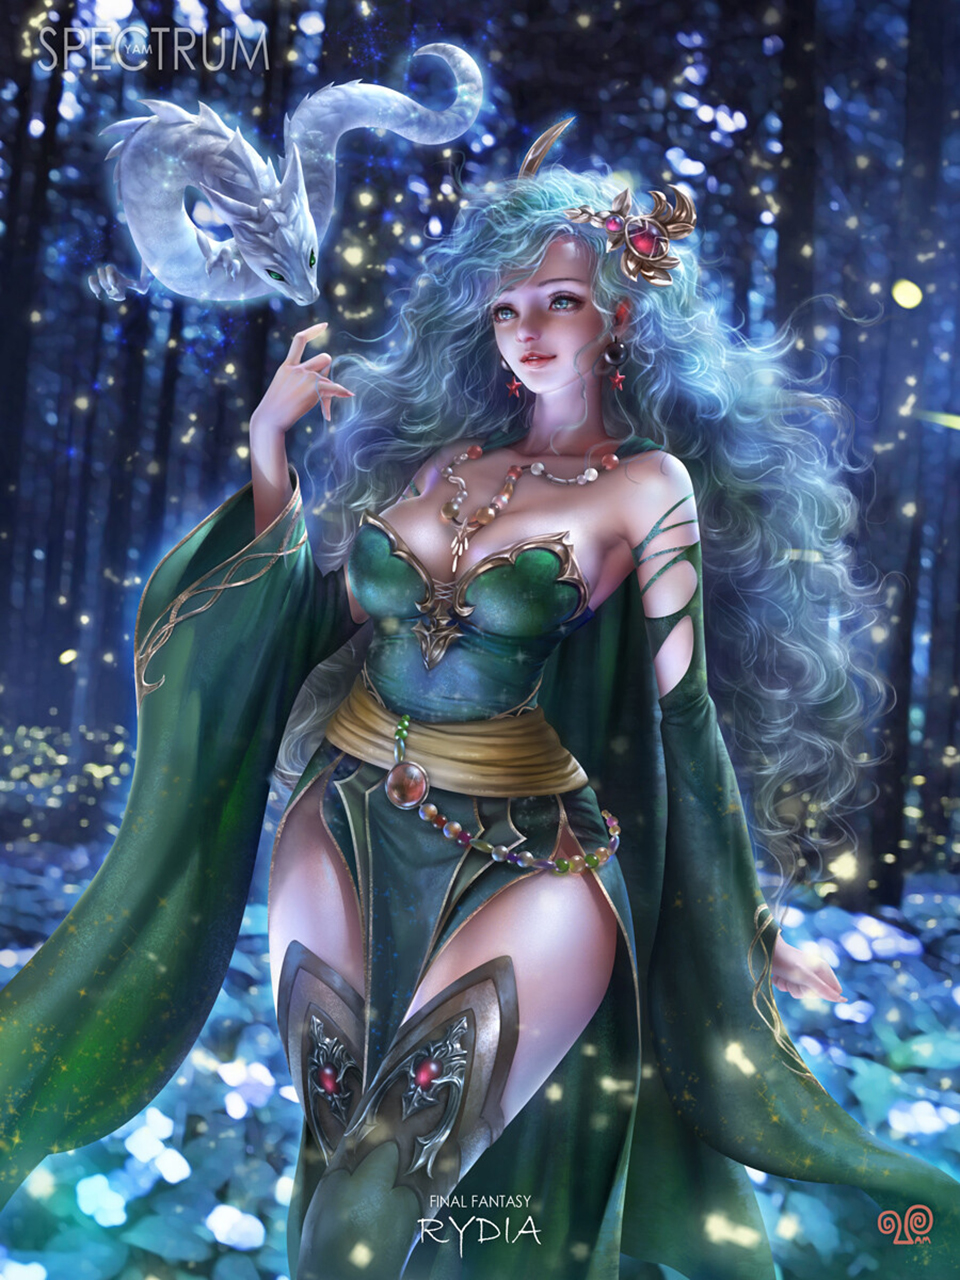 Mansik Yang Drawing Final Fantasy Women Rydia Blue Hair Long Hair Hair Accessories Curly Hair Dress  960x1280